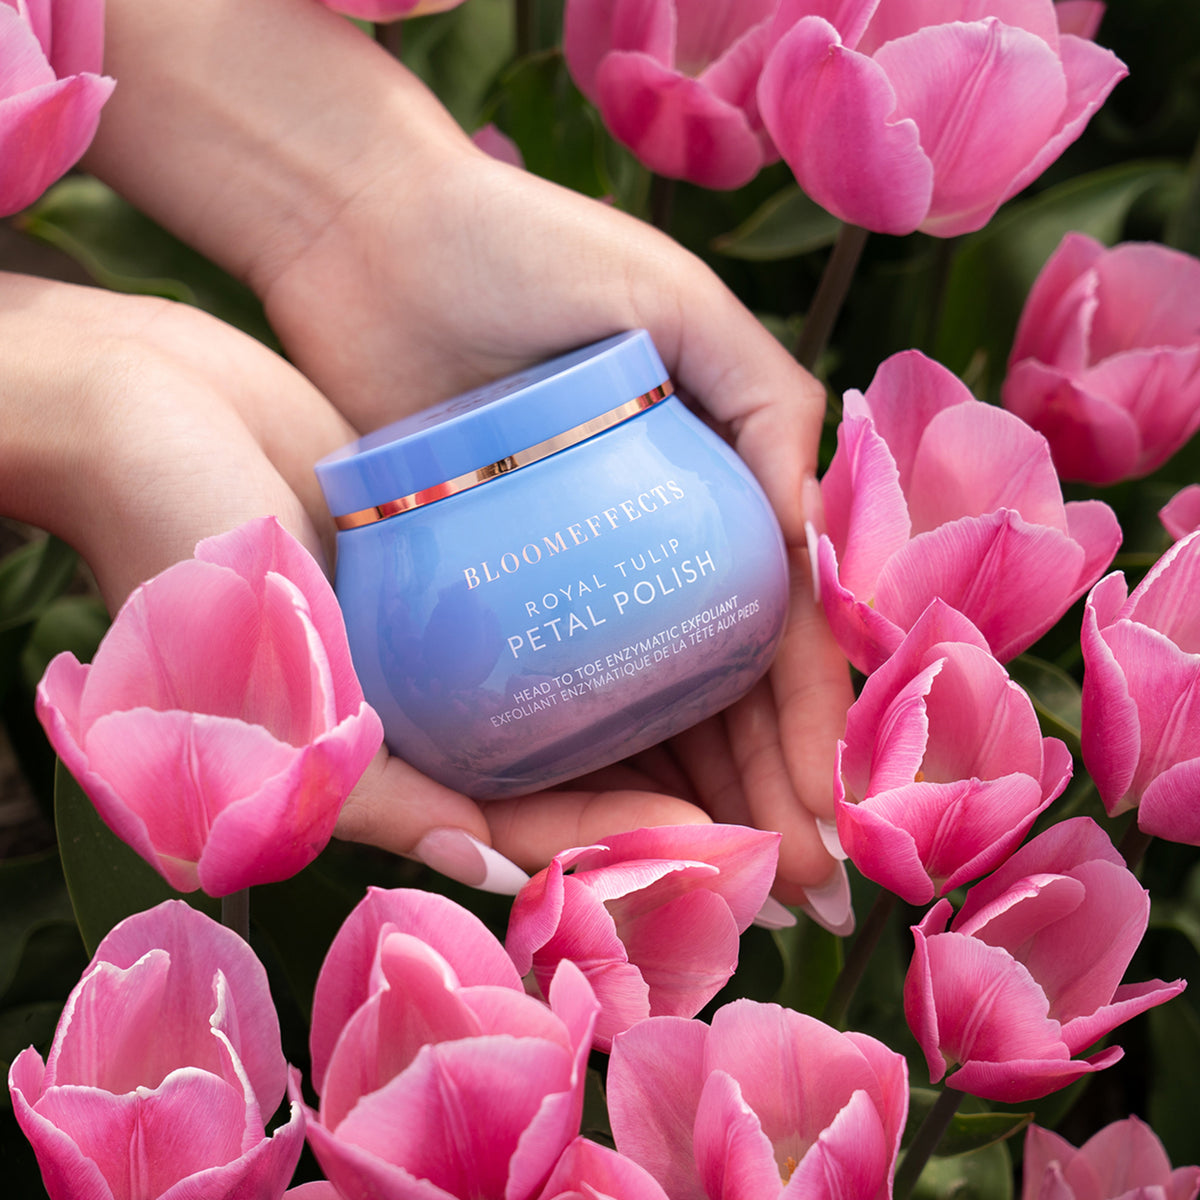 Bloomeffects Royal Tulip Petal Polish .